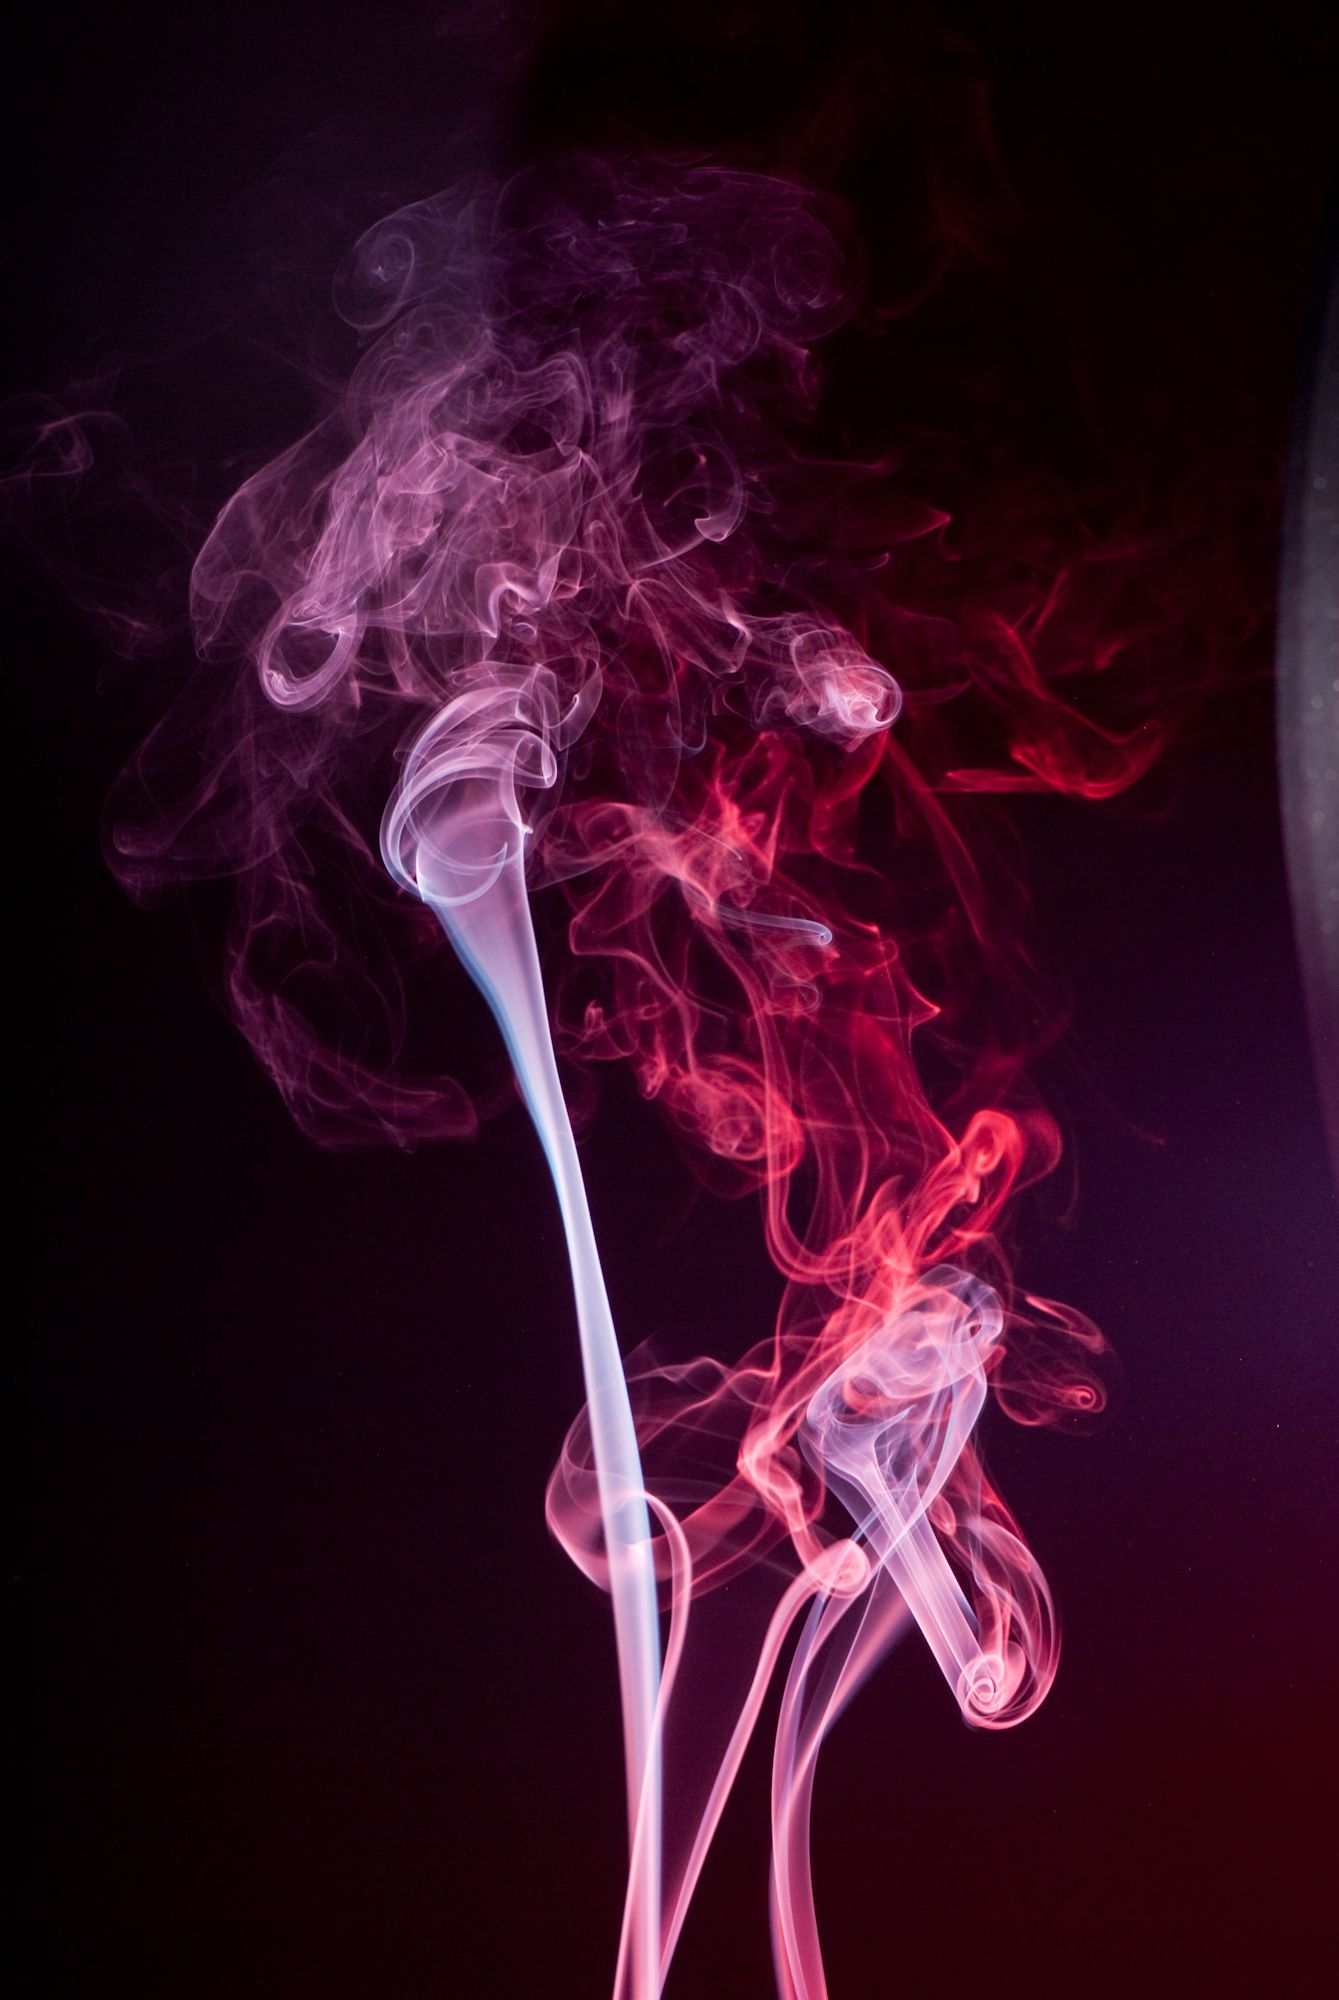 smoke art photography | ... & Beautiful Examples of PhotoShopped ...